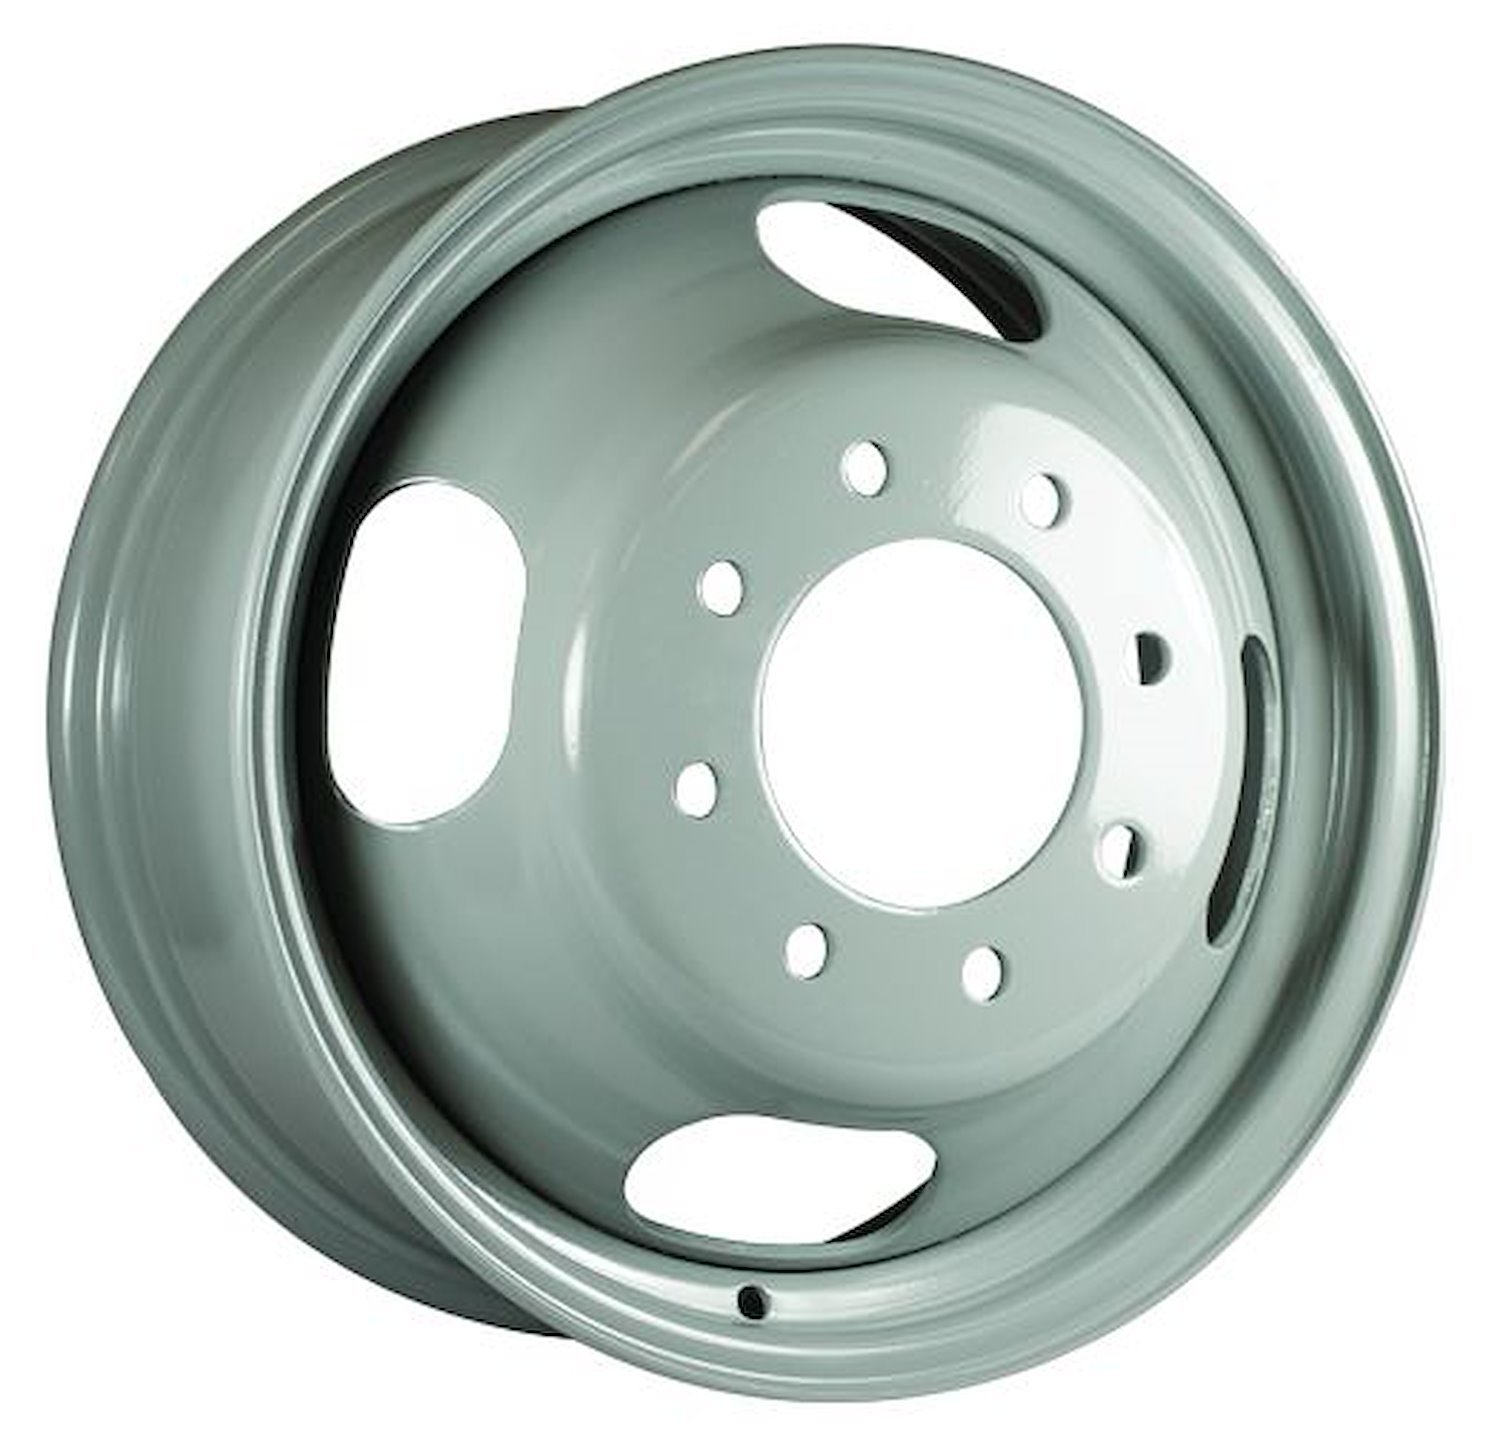 H5125-X Dually Wheel [Size: 16" x 6.50"] Grey Finish